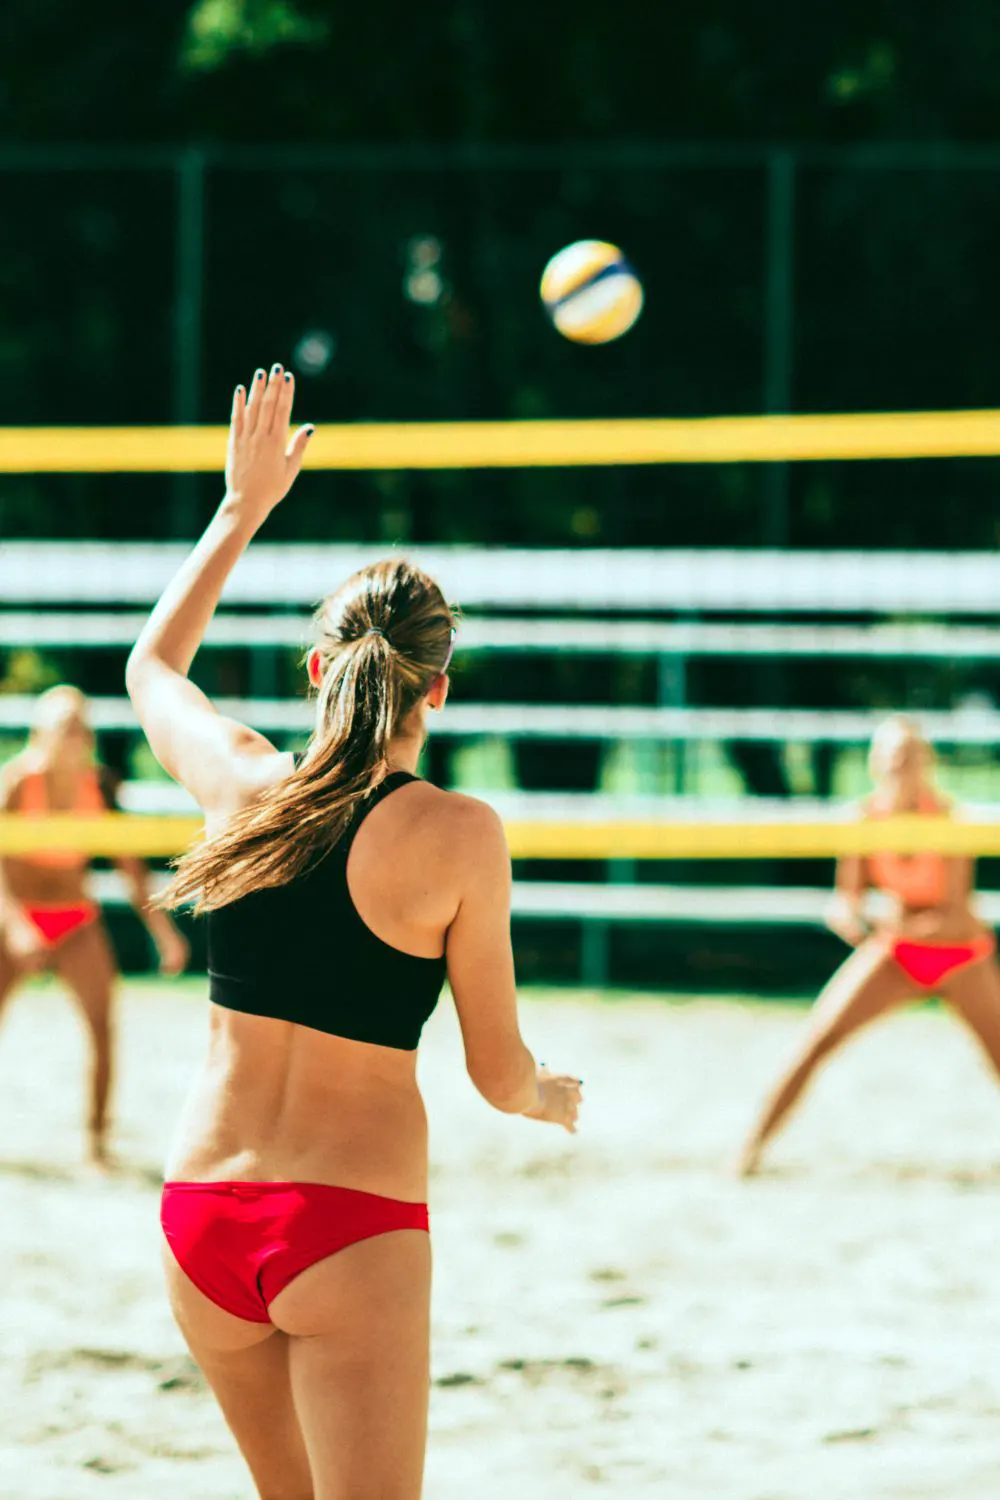 Girls playing beach volleyball